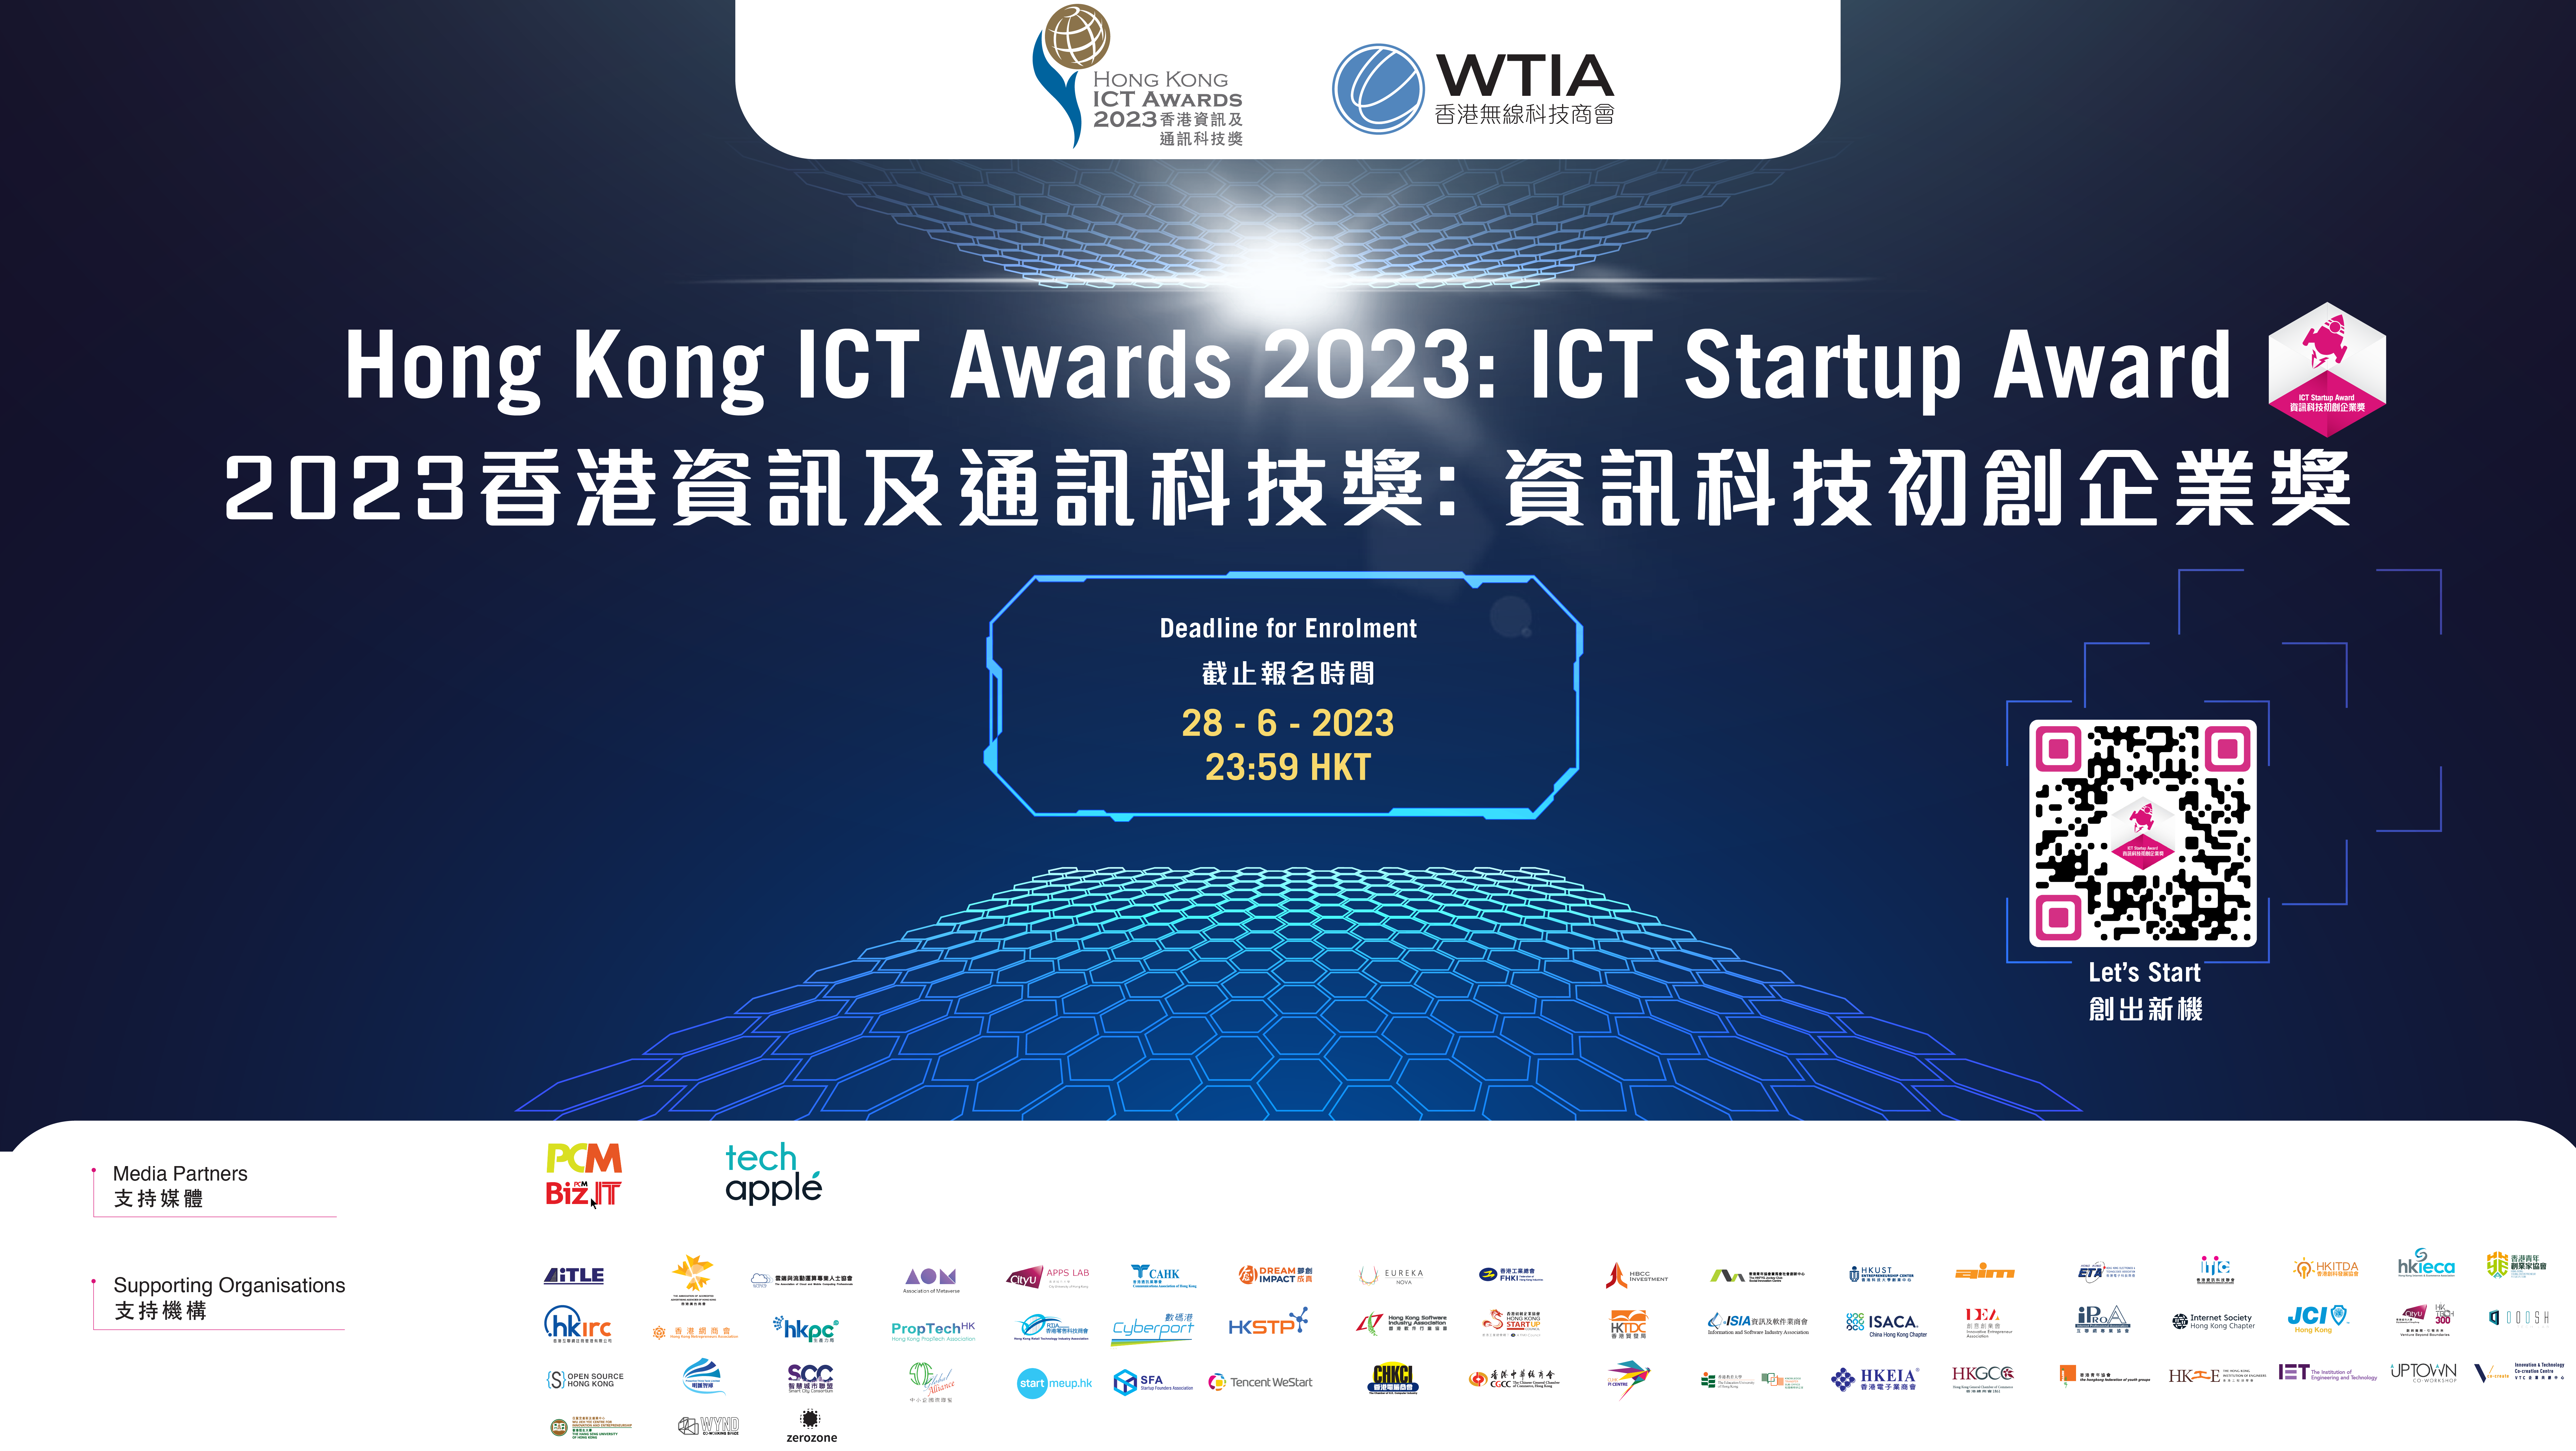 【年度香港初创舞台】Hong Kong ICT Awards: ICT Startup Award 2023 ｜现正接受网上报名 